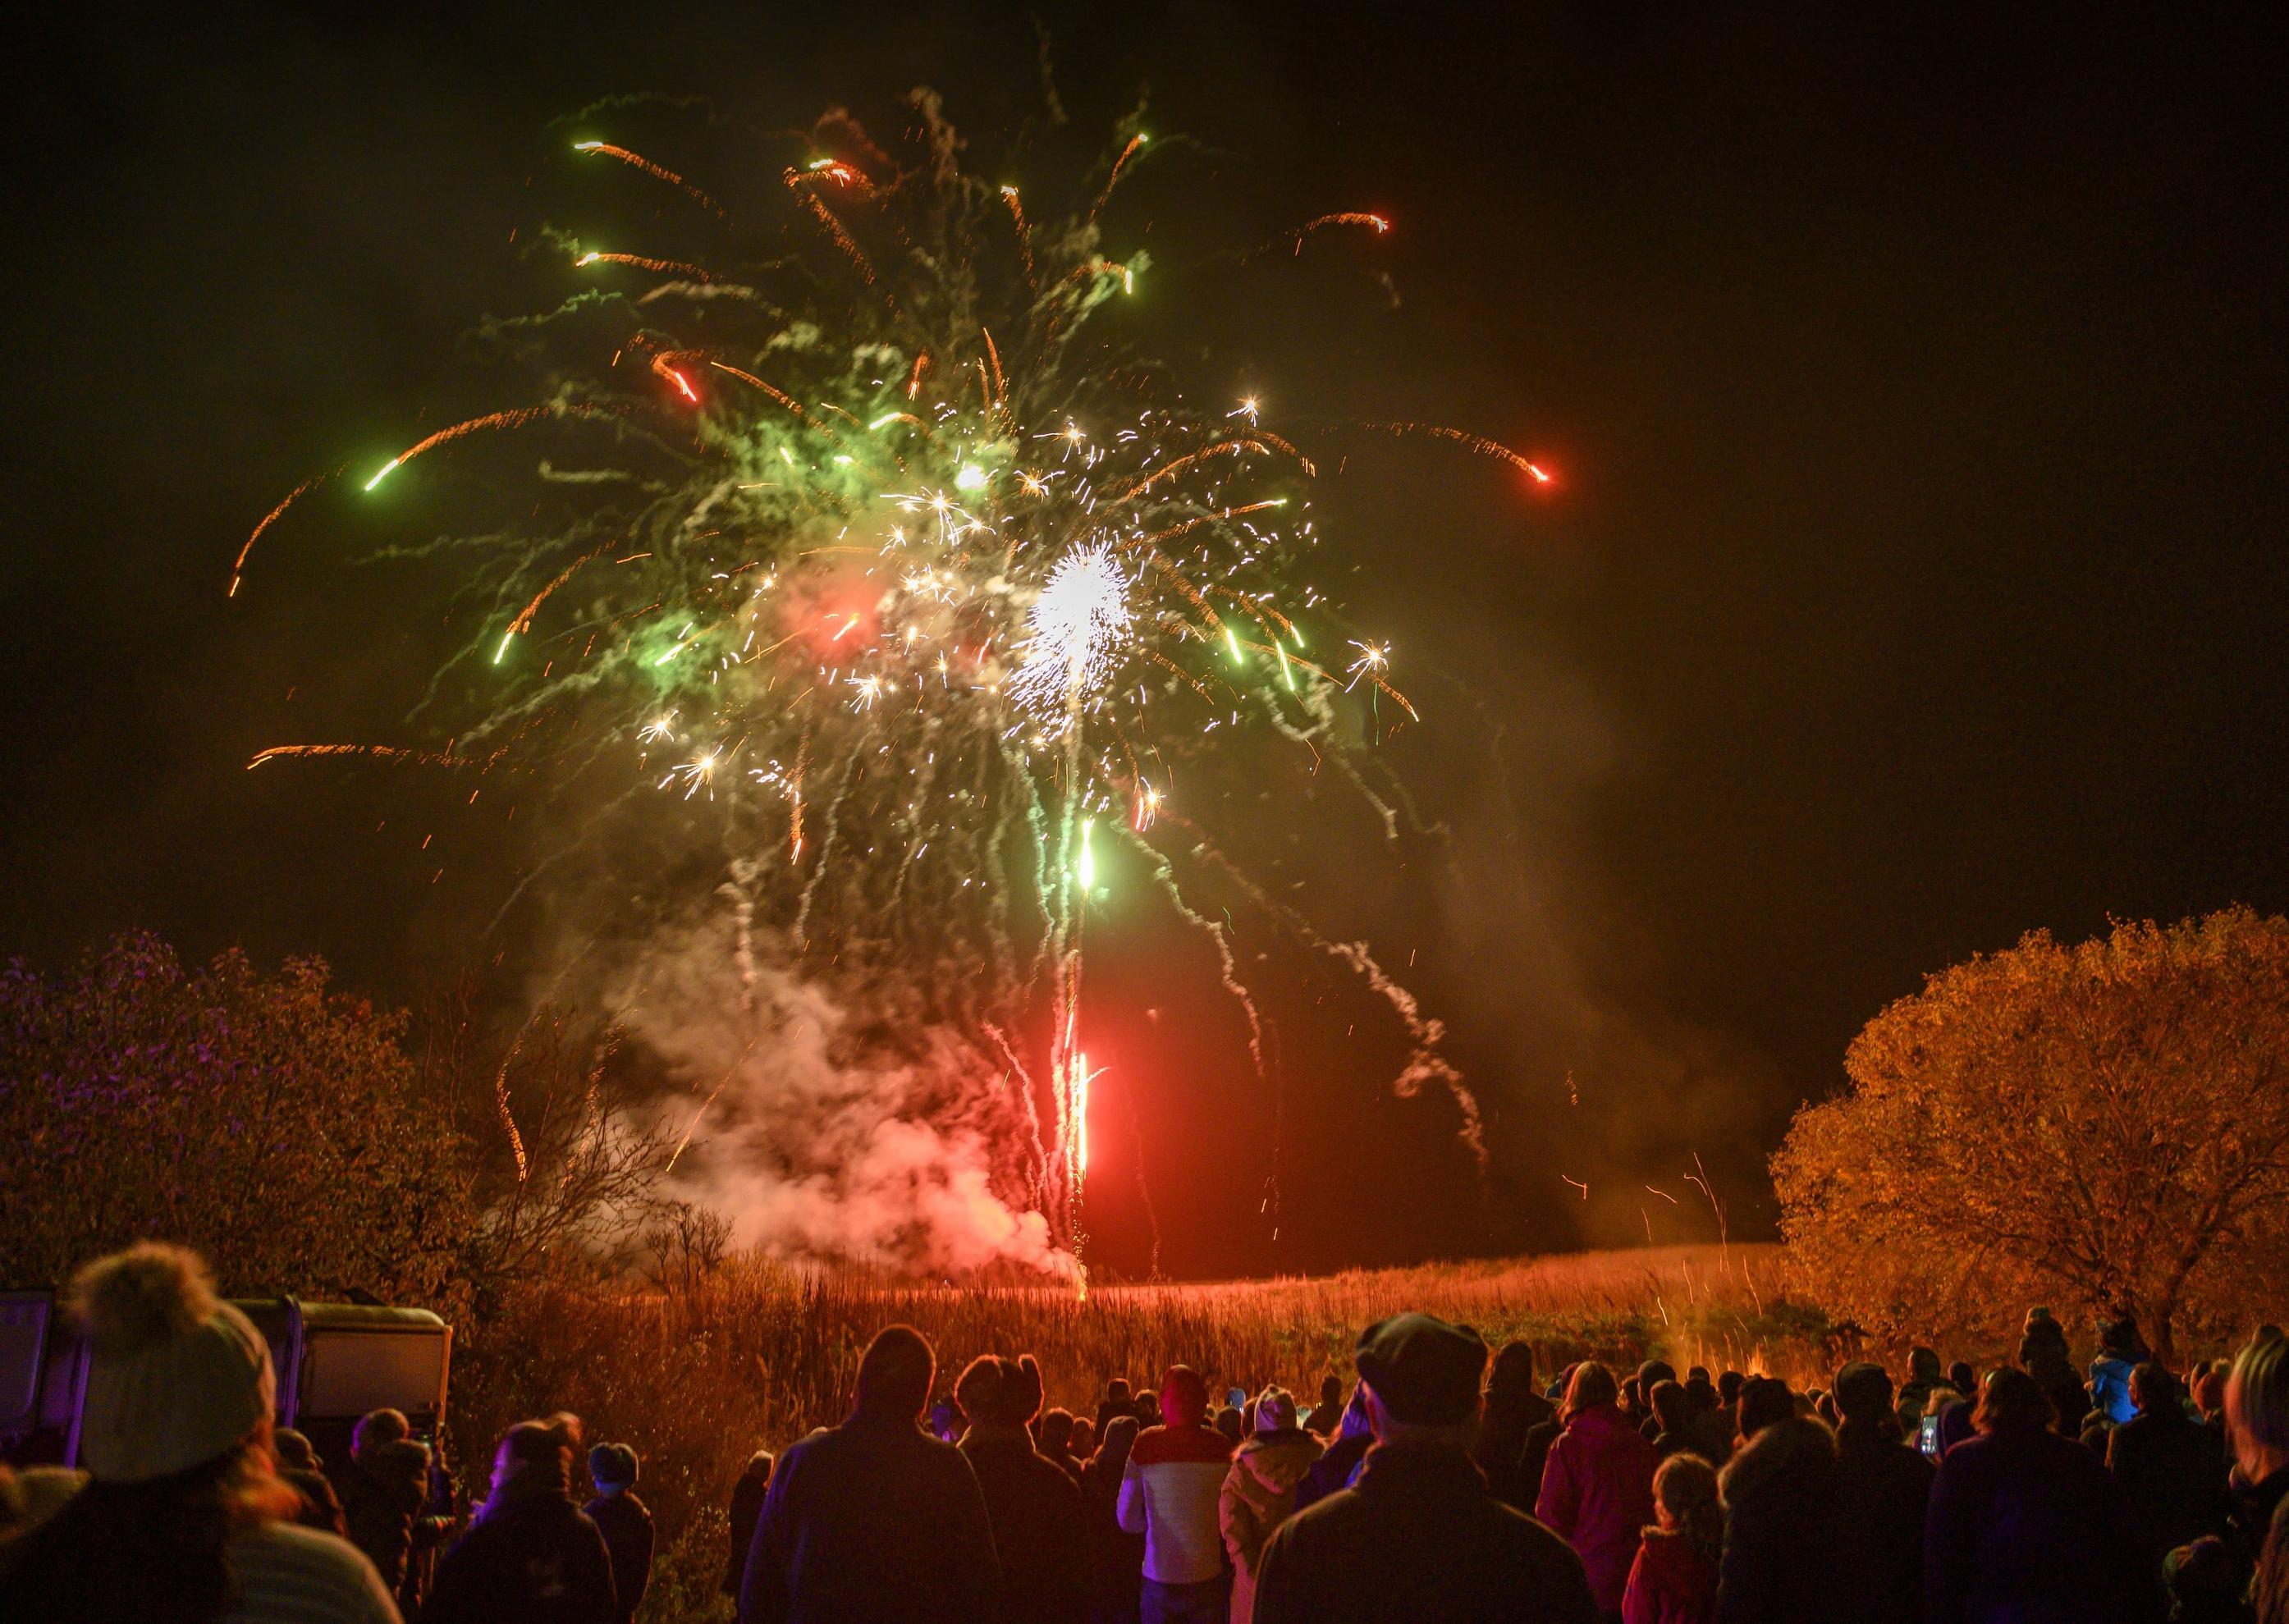 Lauder fireworks display 2019

Fireworks on the night

Pic Phil Wilkinson 
info@philspix.com